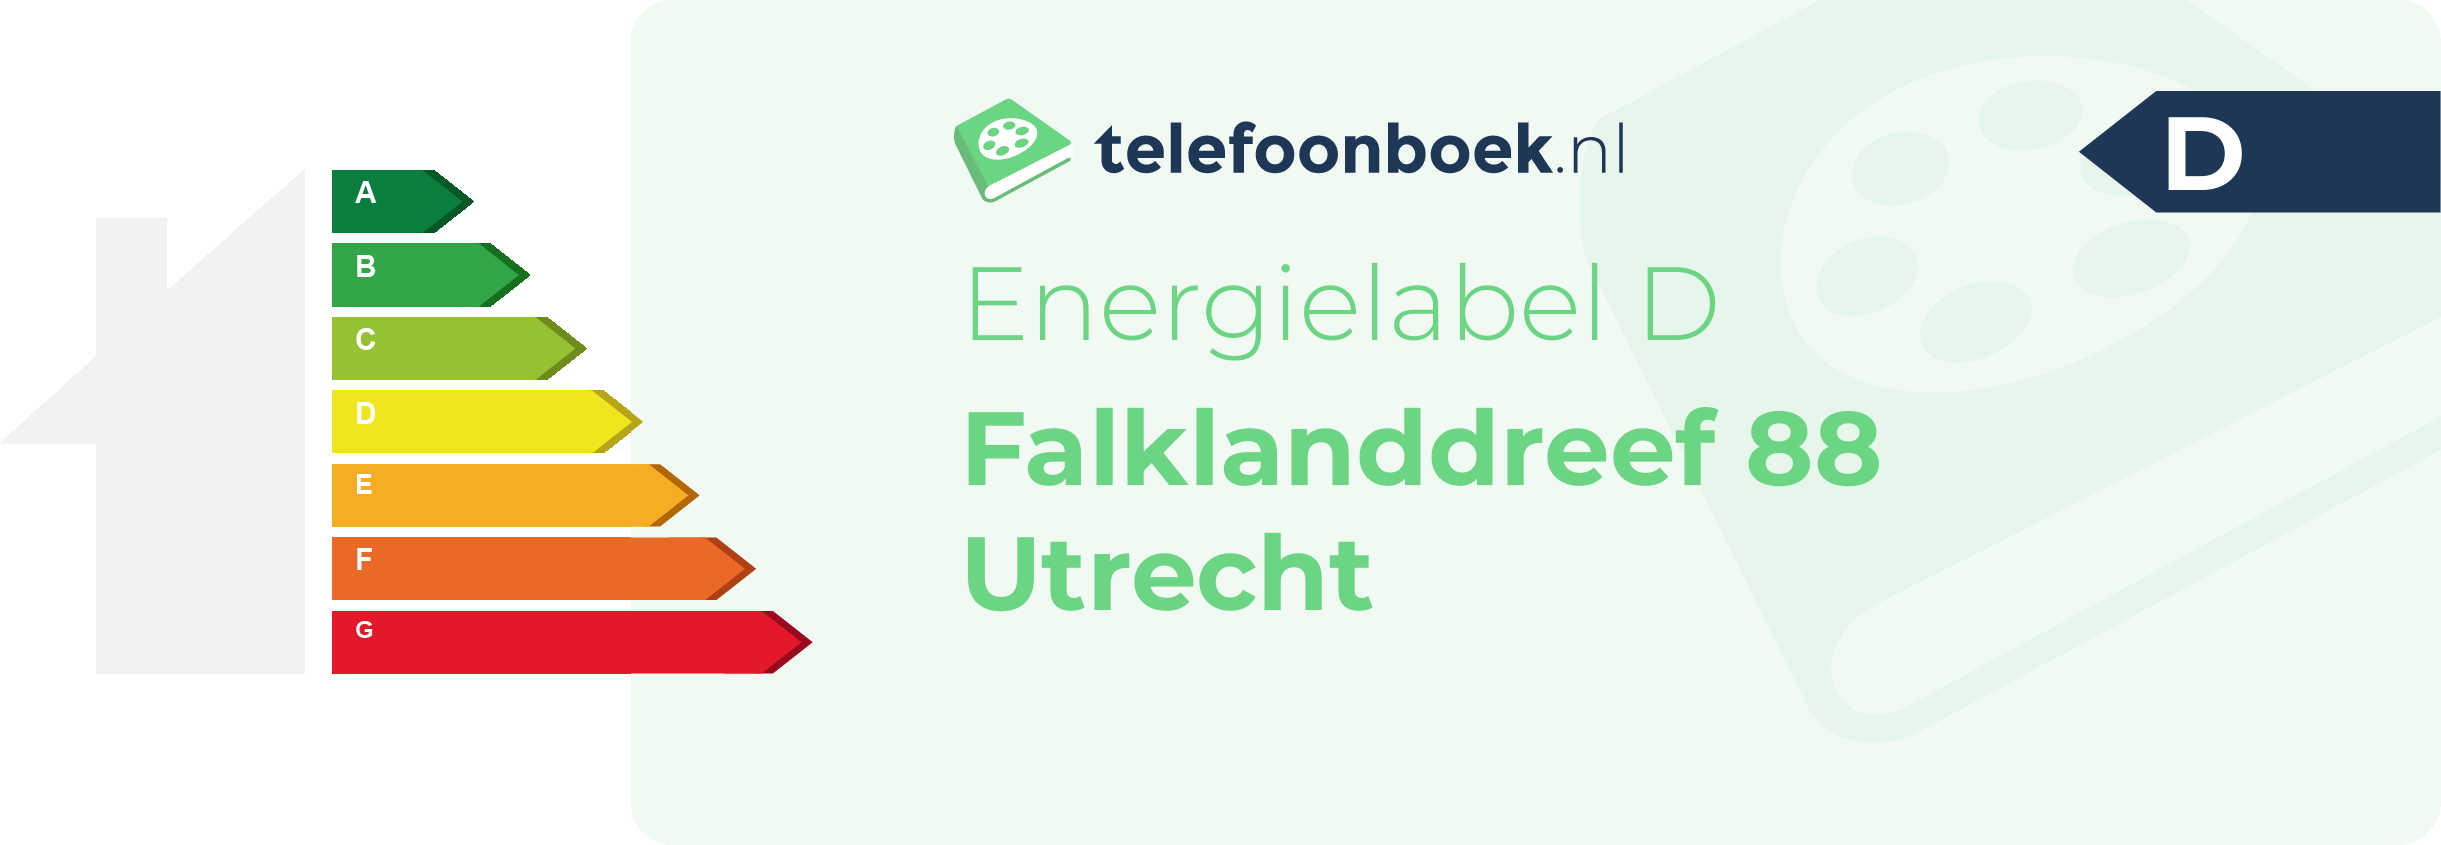 Energielabel Falklanddreef 88 Utrecht